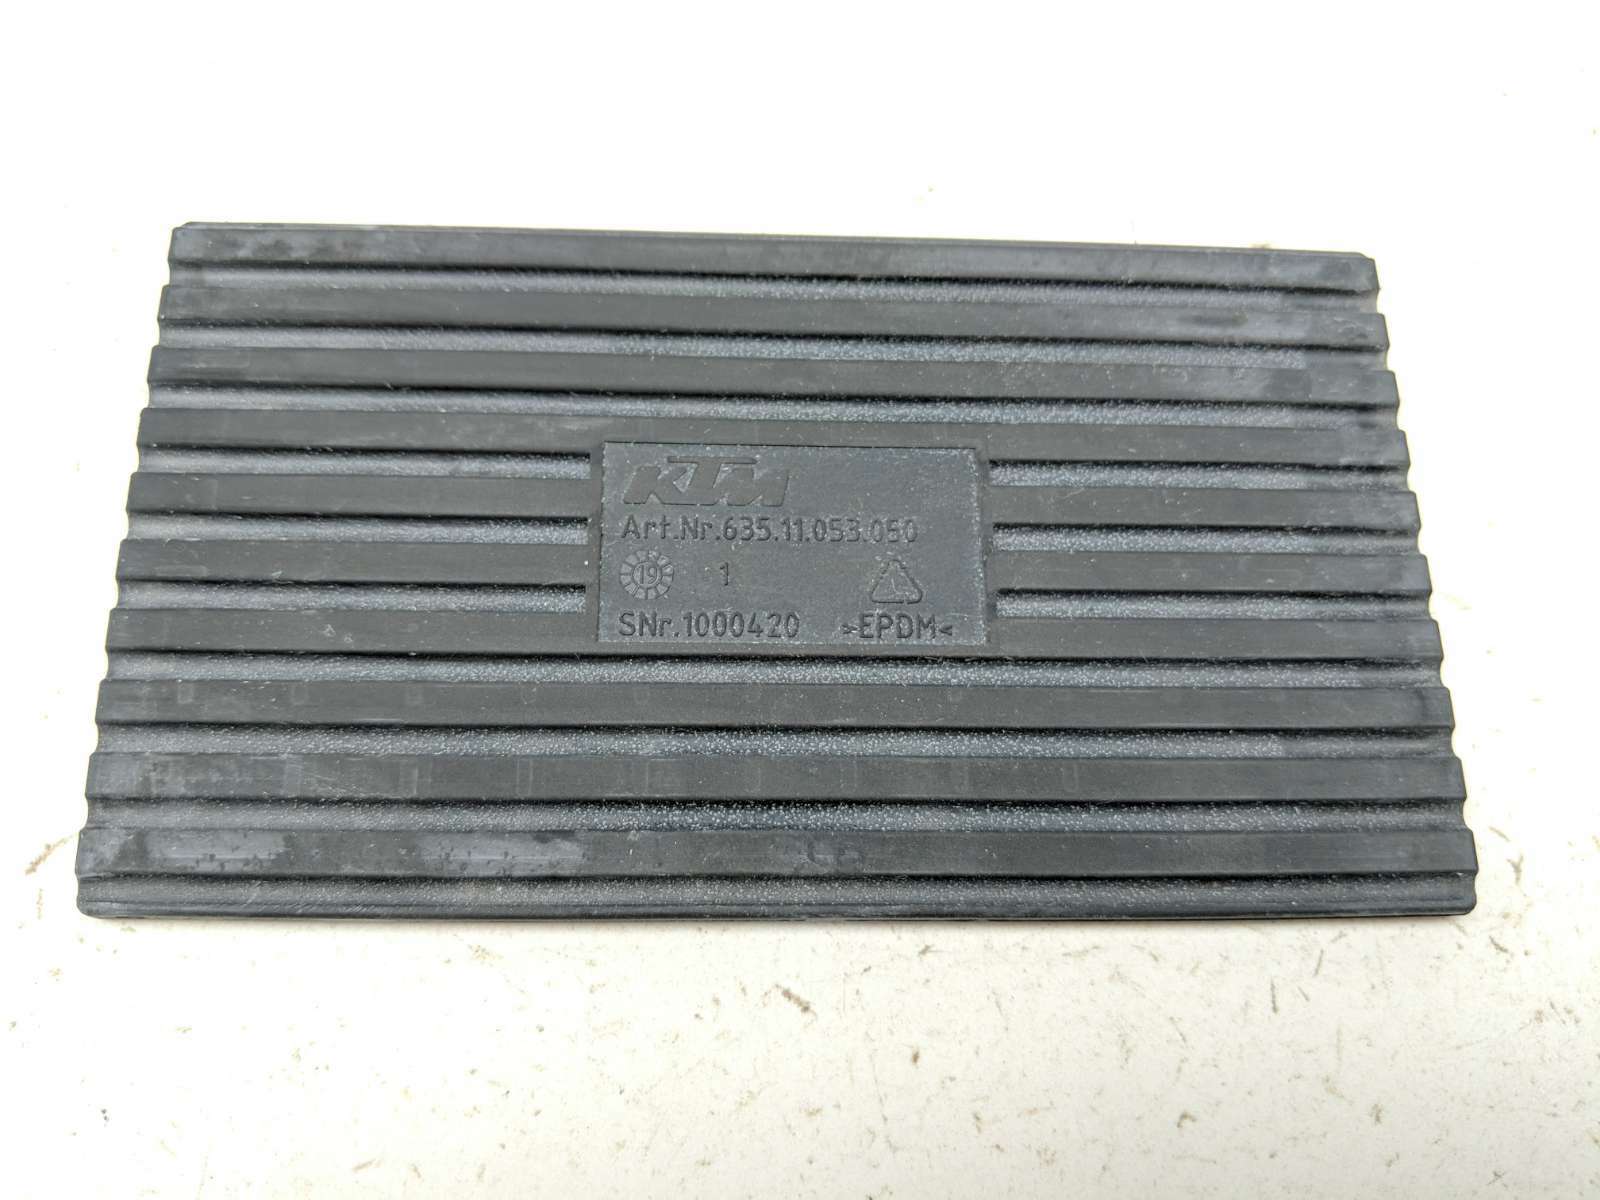 19 20 KTM Adventure 790 Battery Box Tray Rubber Damper Support 63511053050